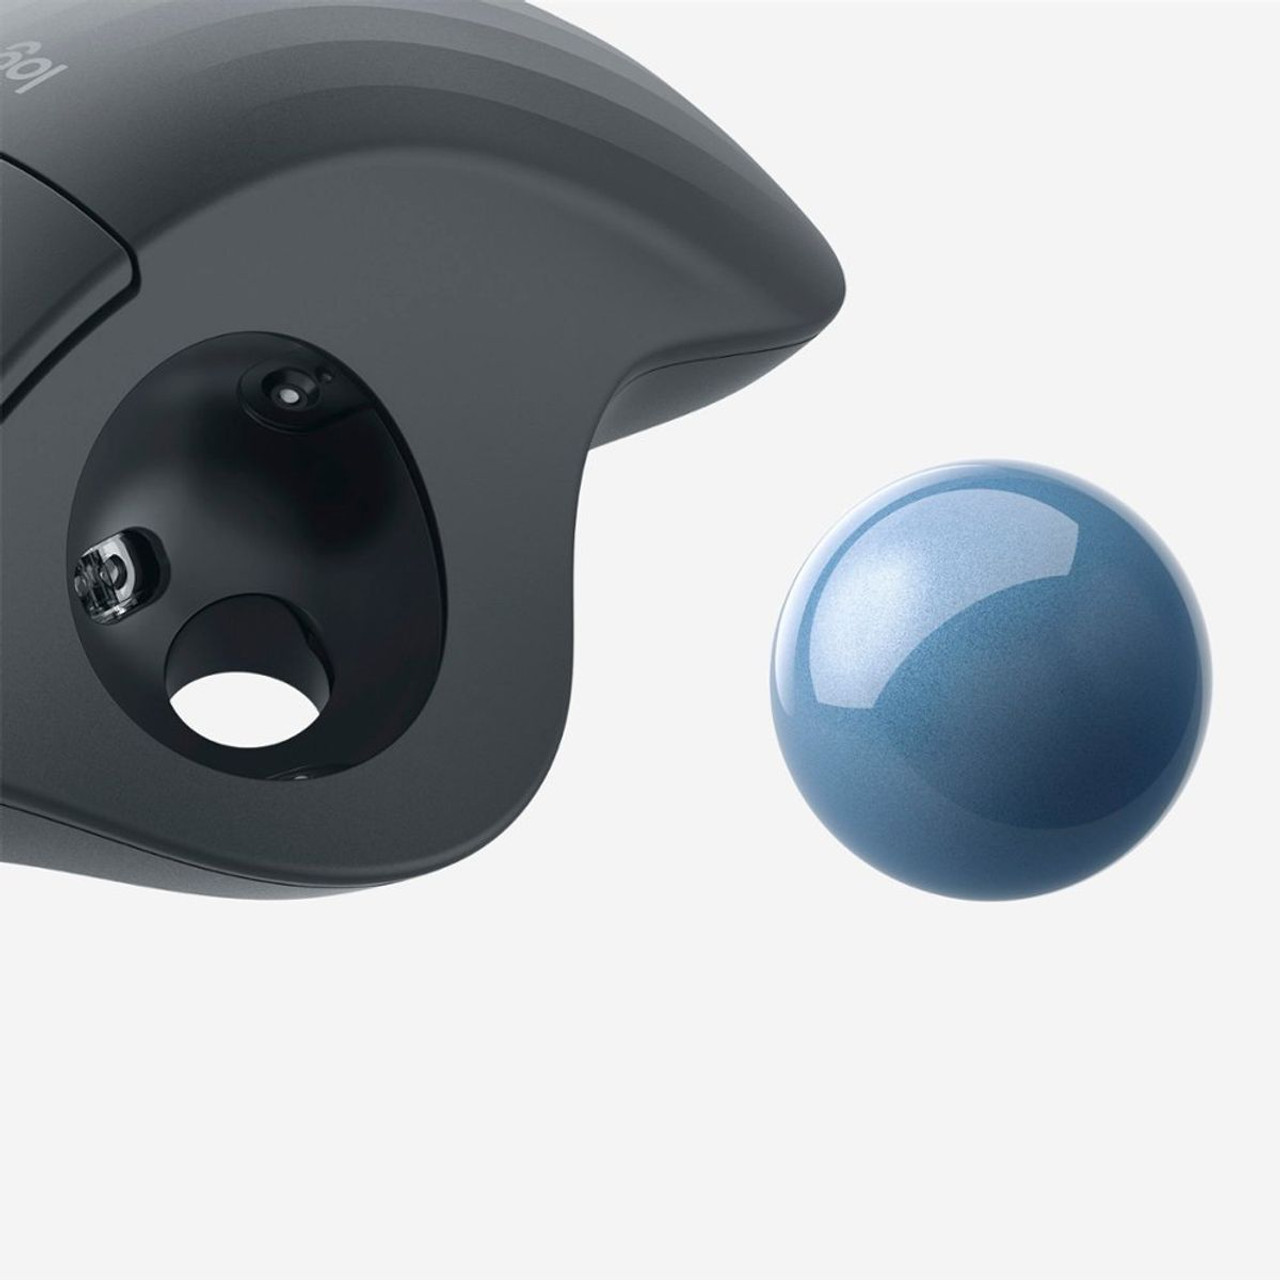 Logitech Ergo M575 Wireless Trackball Mouse product image